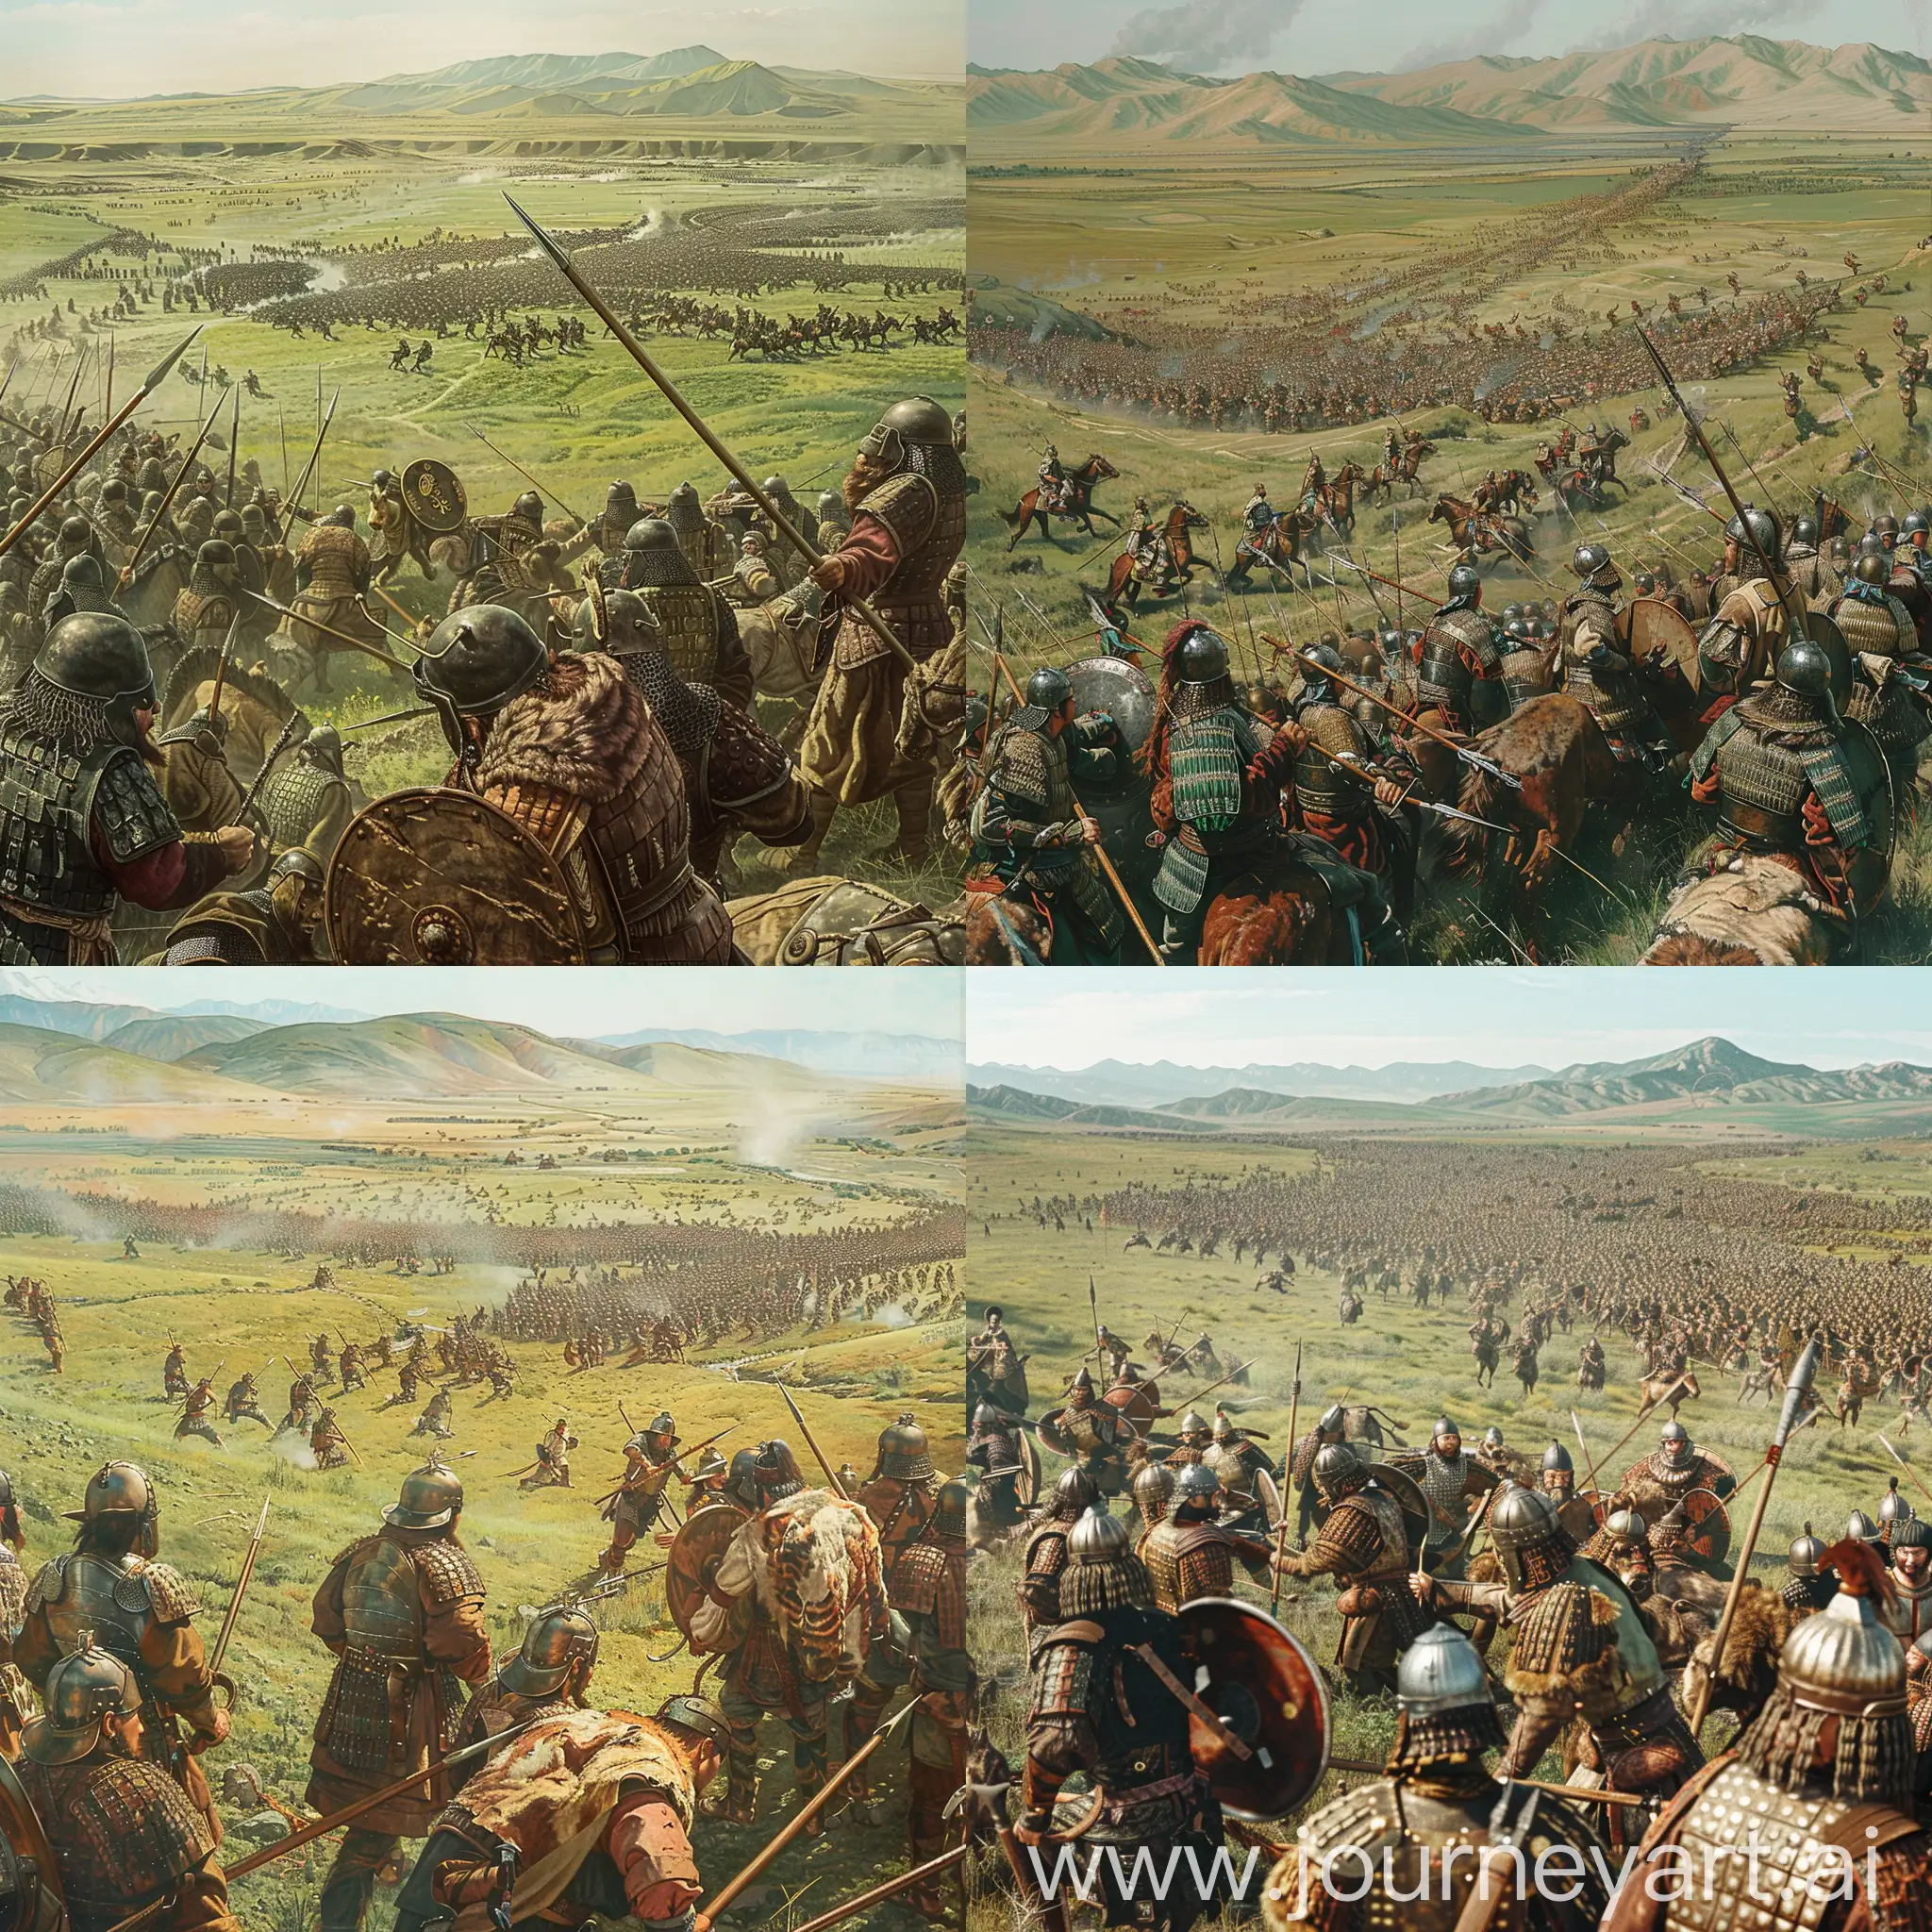 Qin-Soldiers-Battling-Nomadic-Enemies-on-the-Steppe